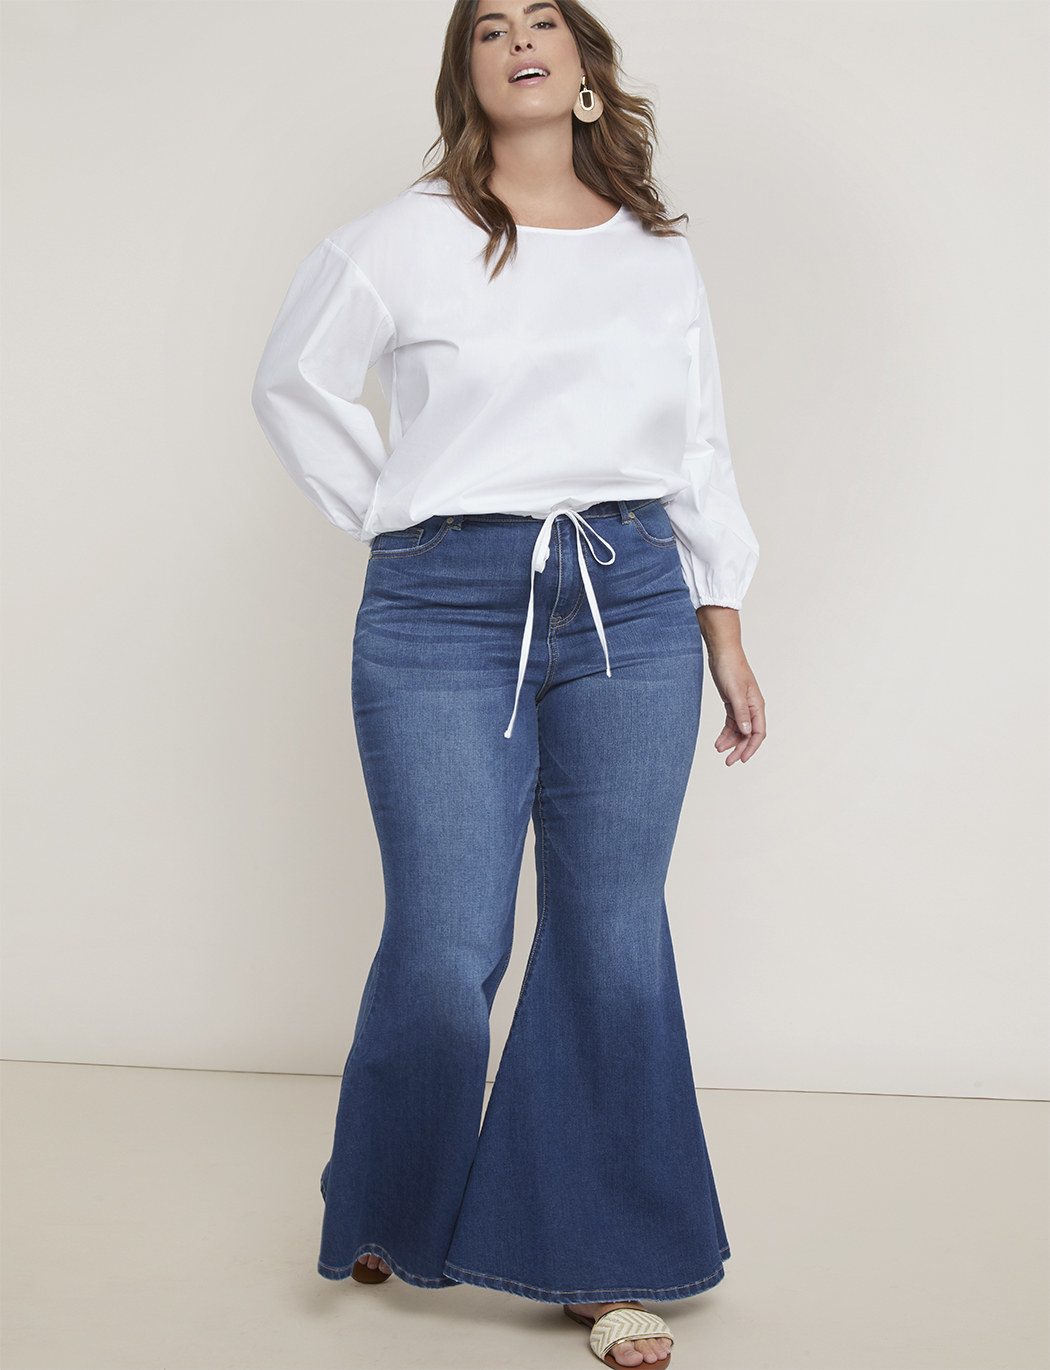 Model wearing light wash flare jeans